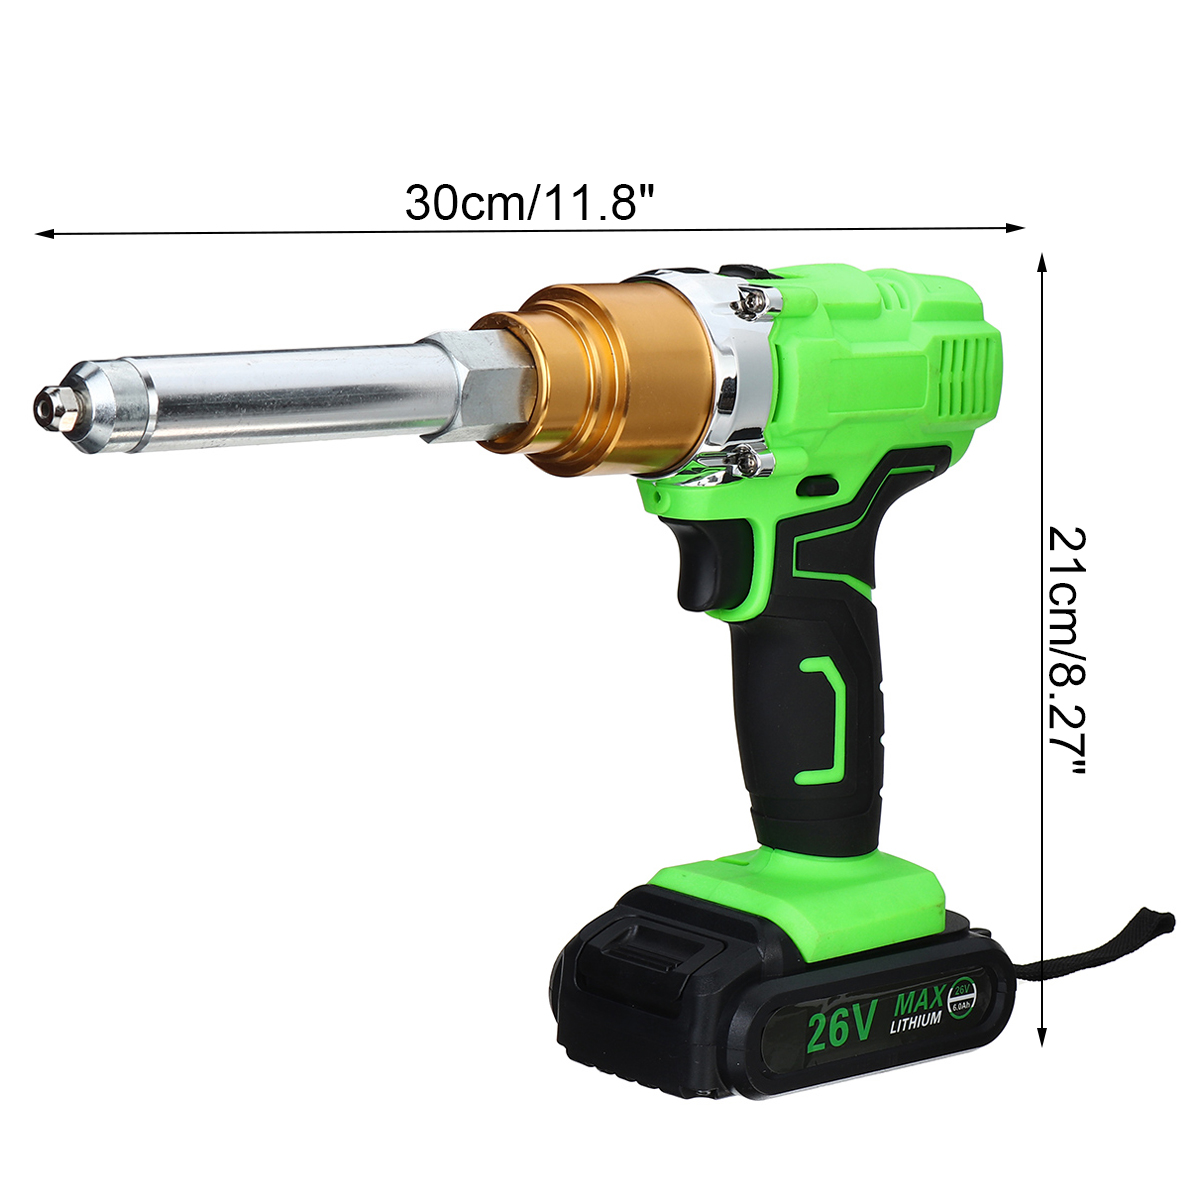 26V-Electric-Cordless-Rivet-Guns-Insert-Nut-Pull-Riveting-Tool-LED-Light-With-Battery-1790808-5